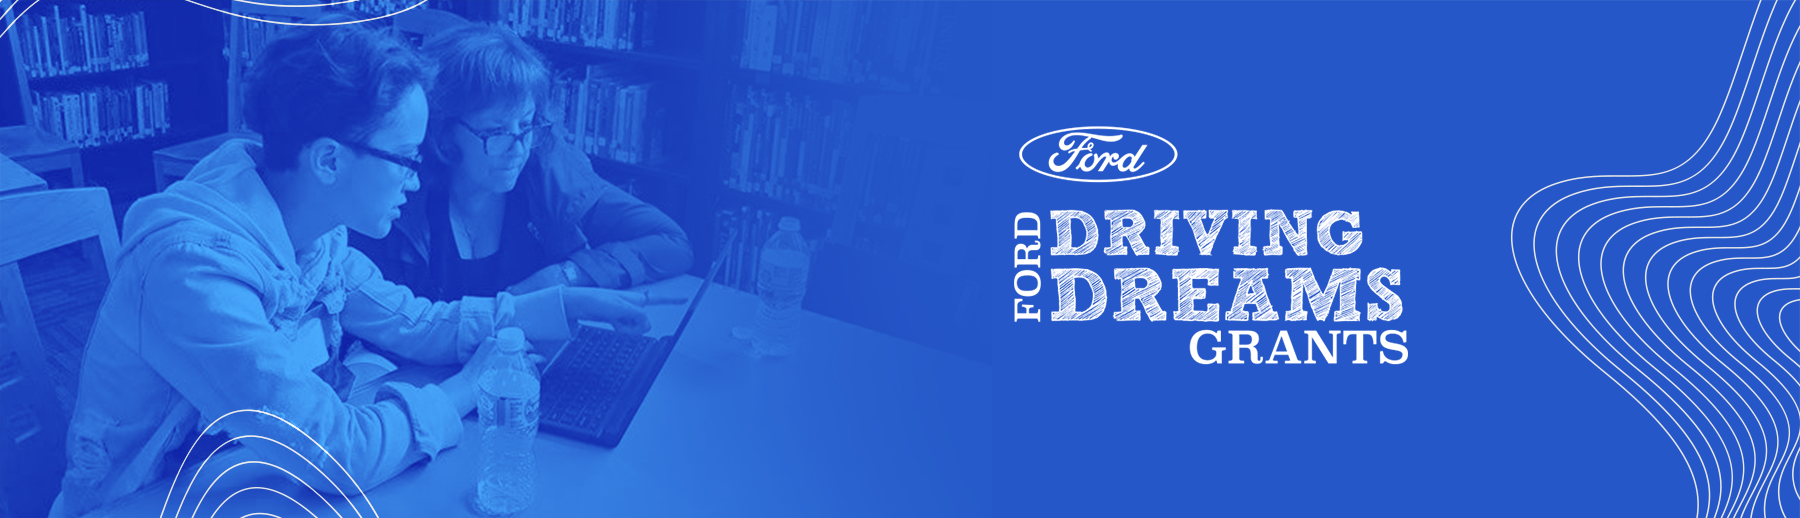 Ford Driving Dreams Grants Program